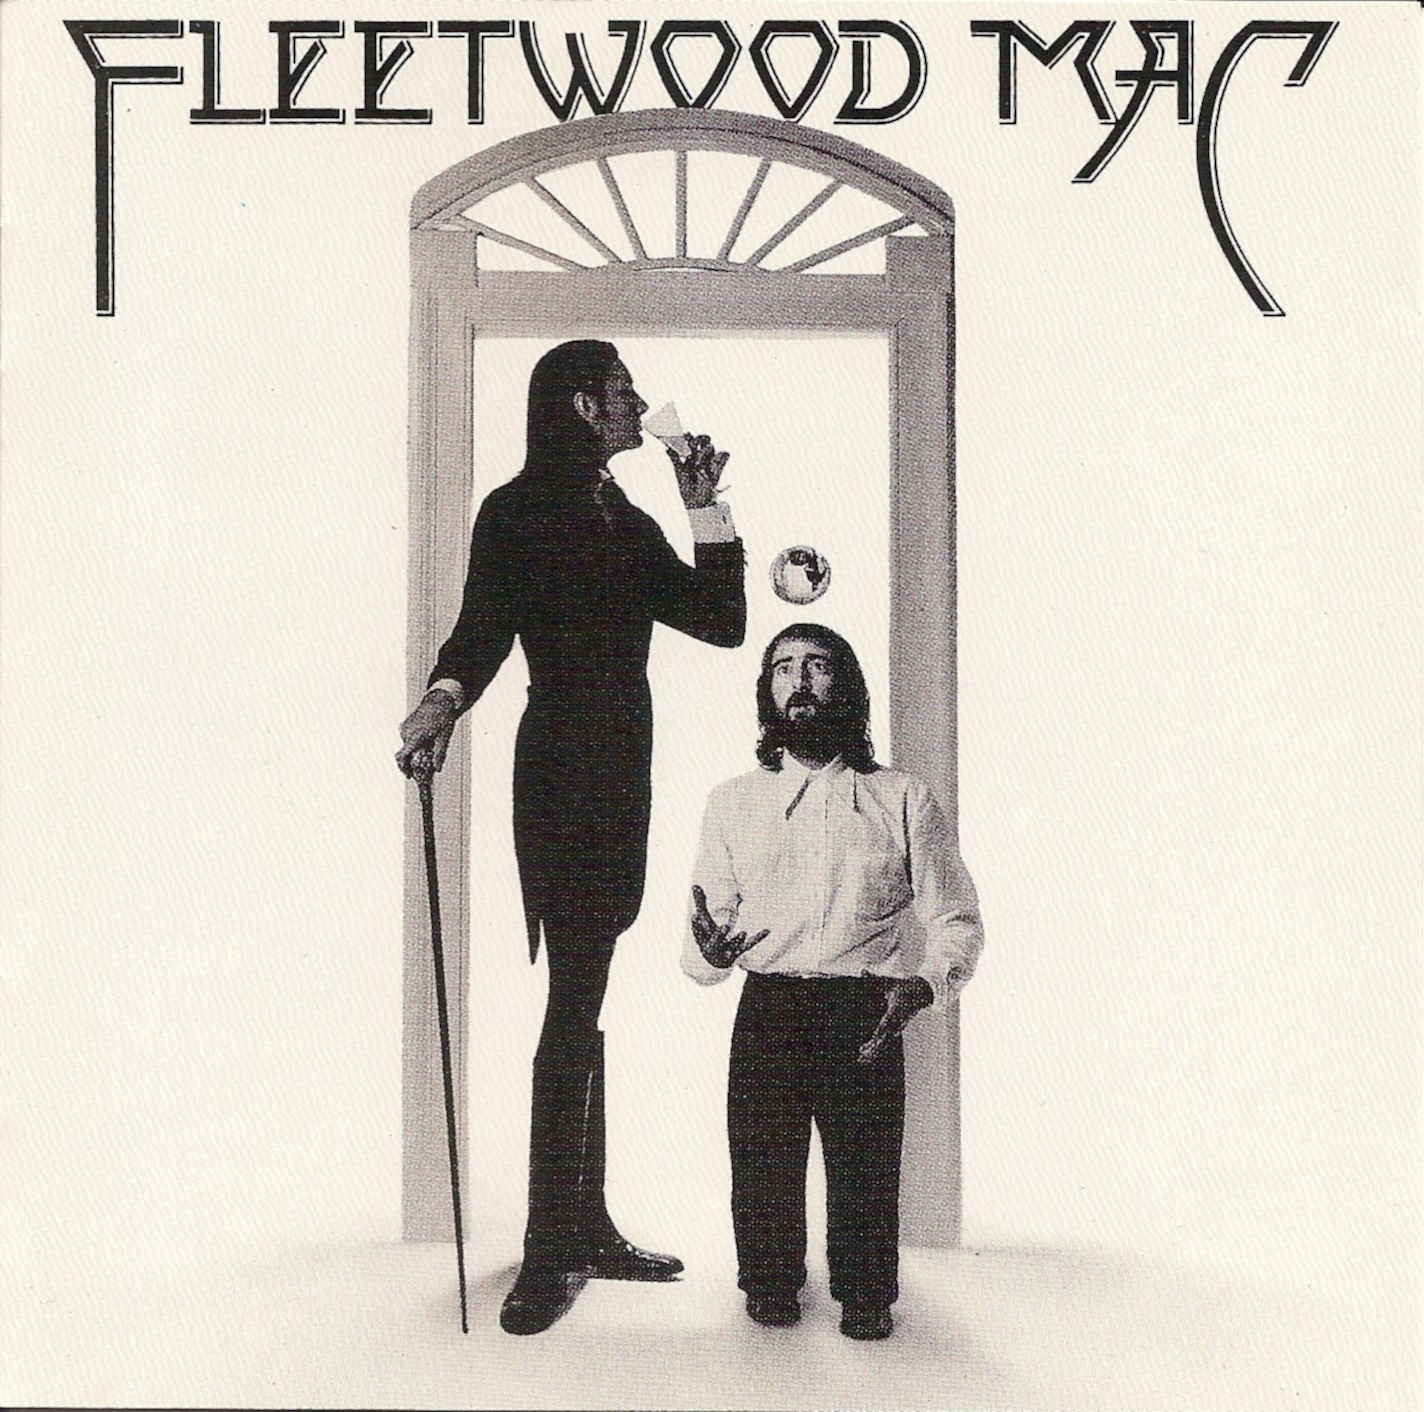 fleetwood mac - photo #9